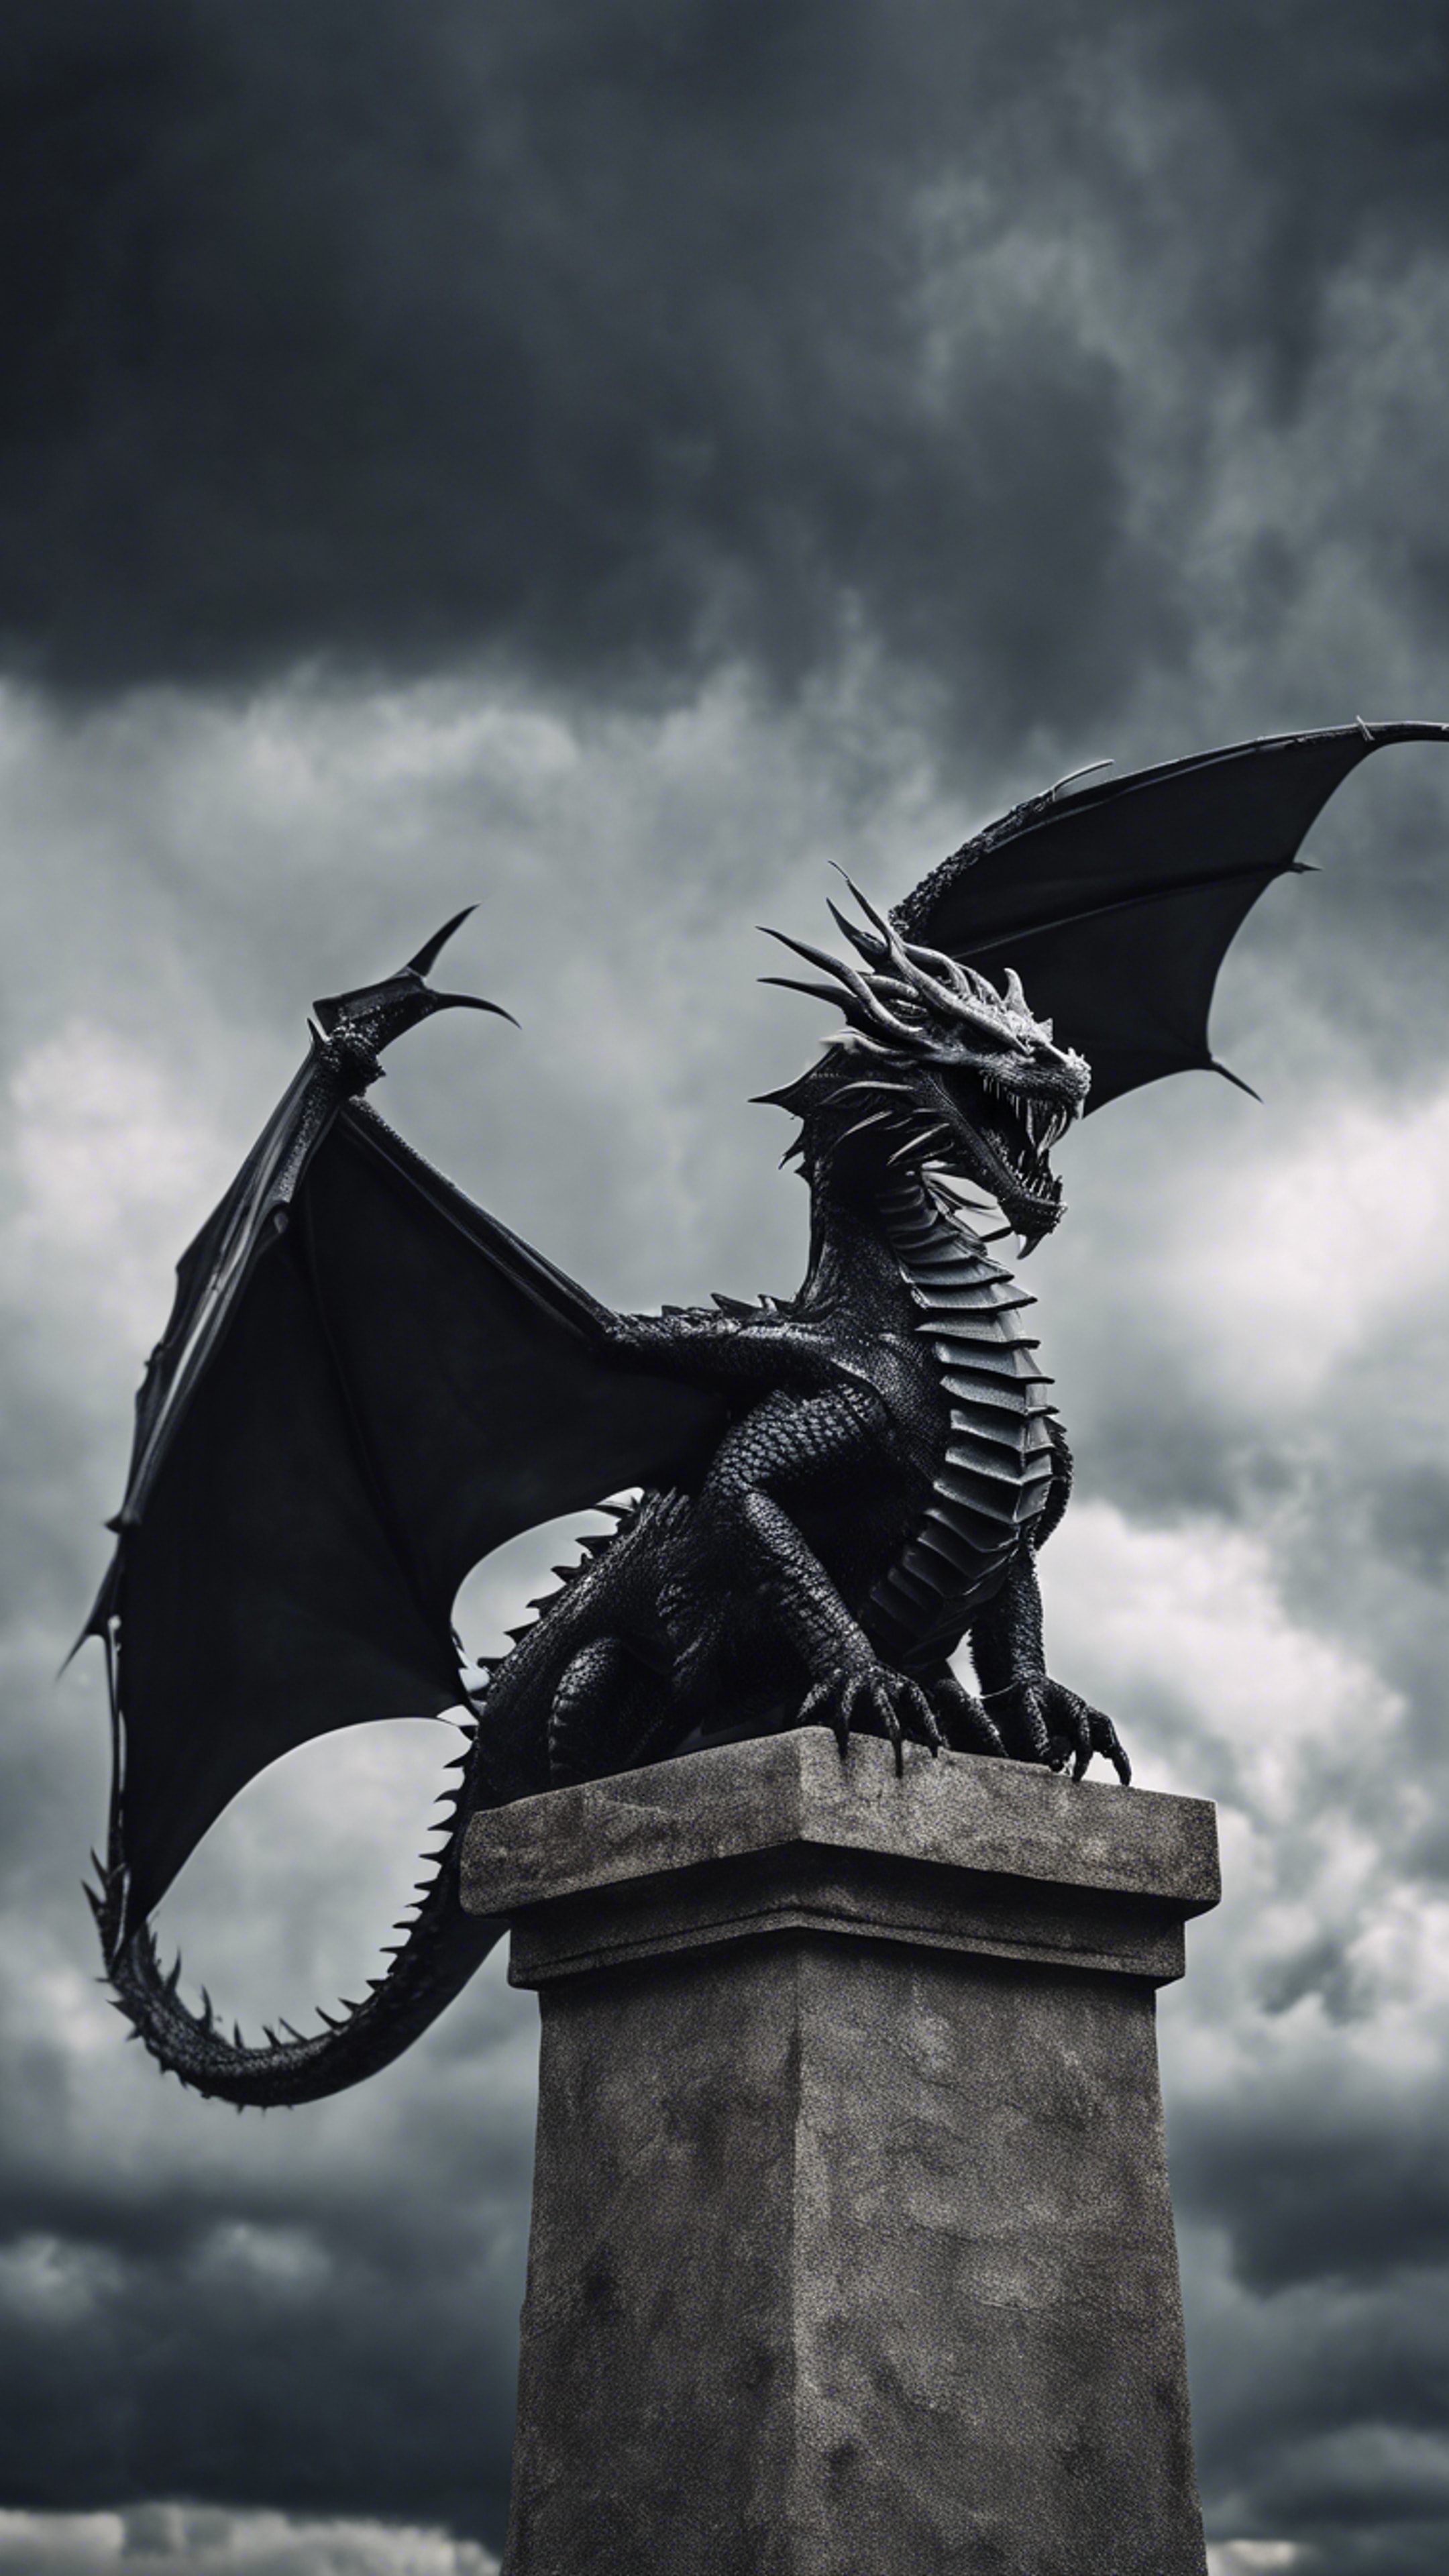 A gothic-style, black iron dragon flying amidst stormy, dark clouds. Обои[aebeaee8cf654a26baba]